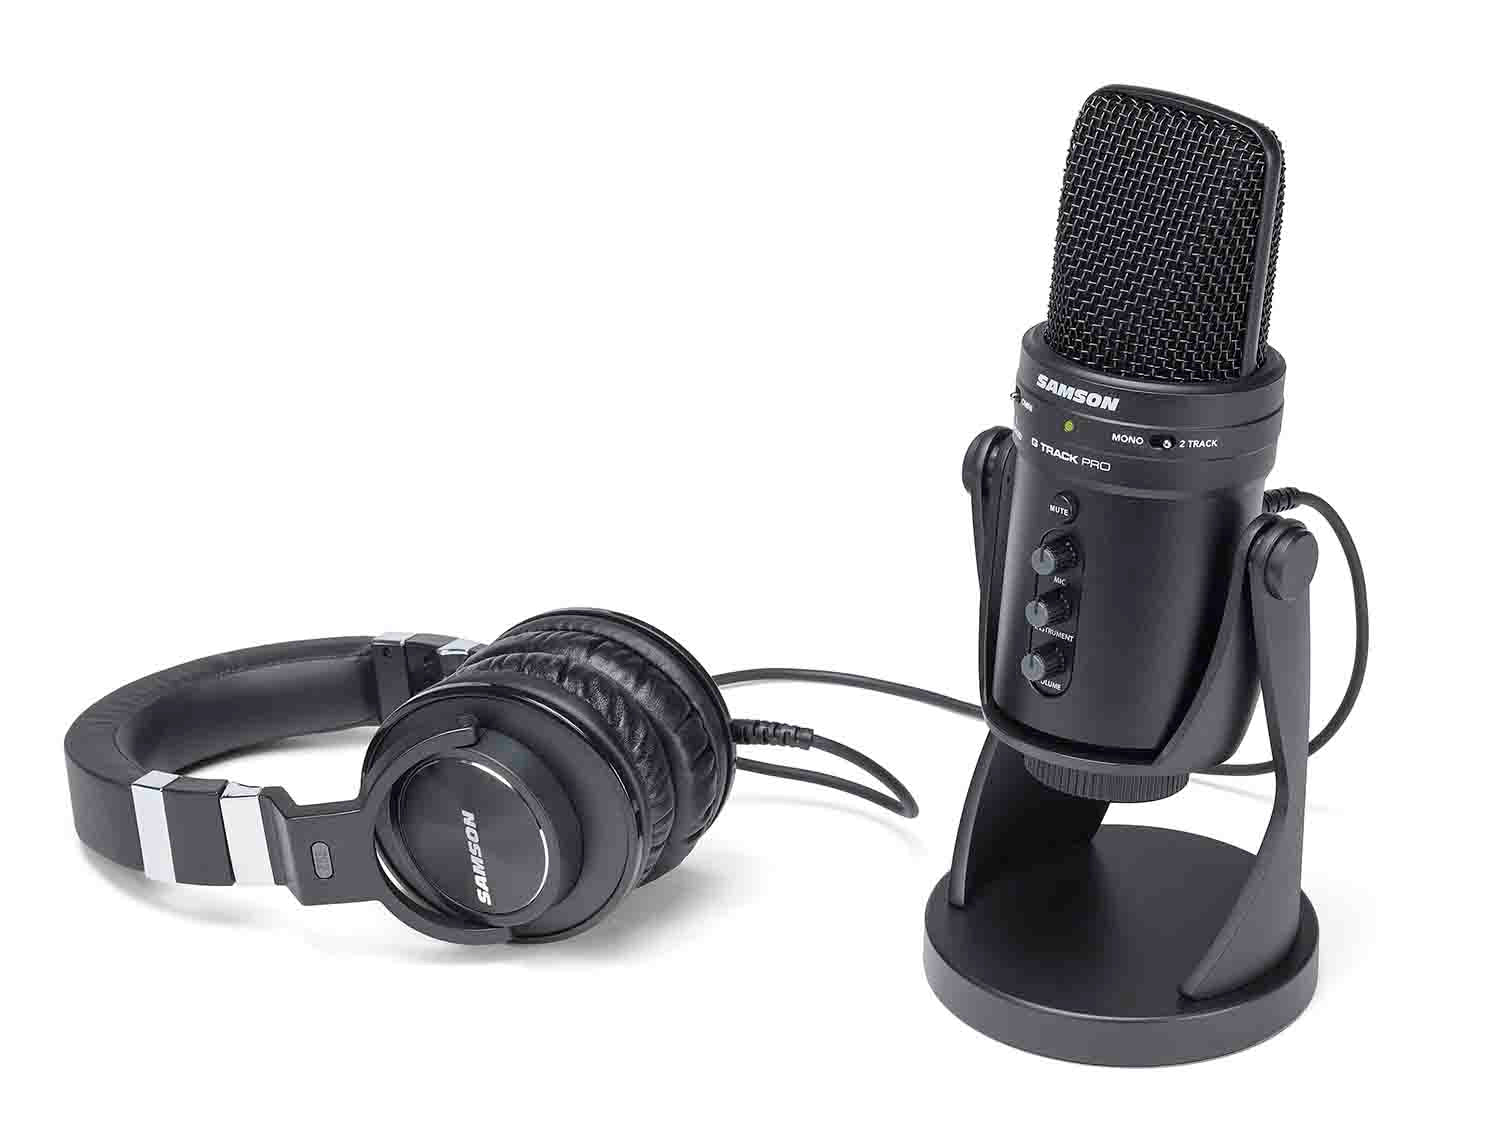 Samson G Track Pro Professional USB Microphone with Audio Interface - Hollywood DJ